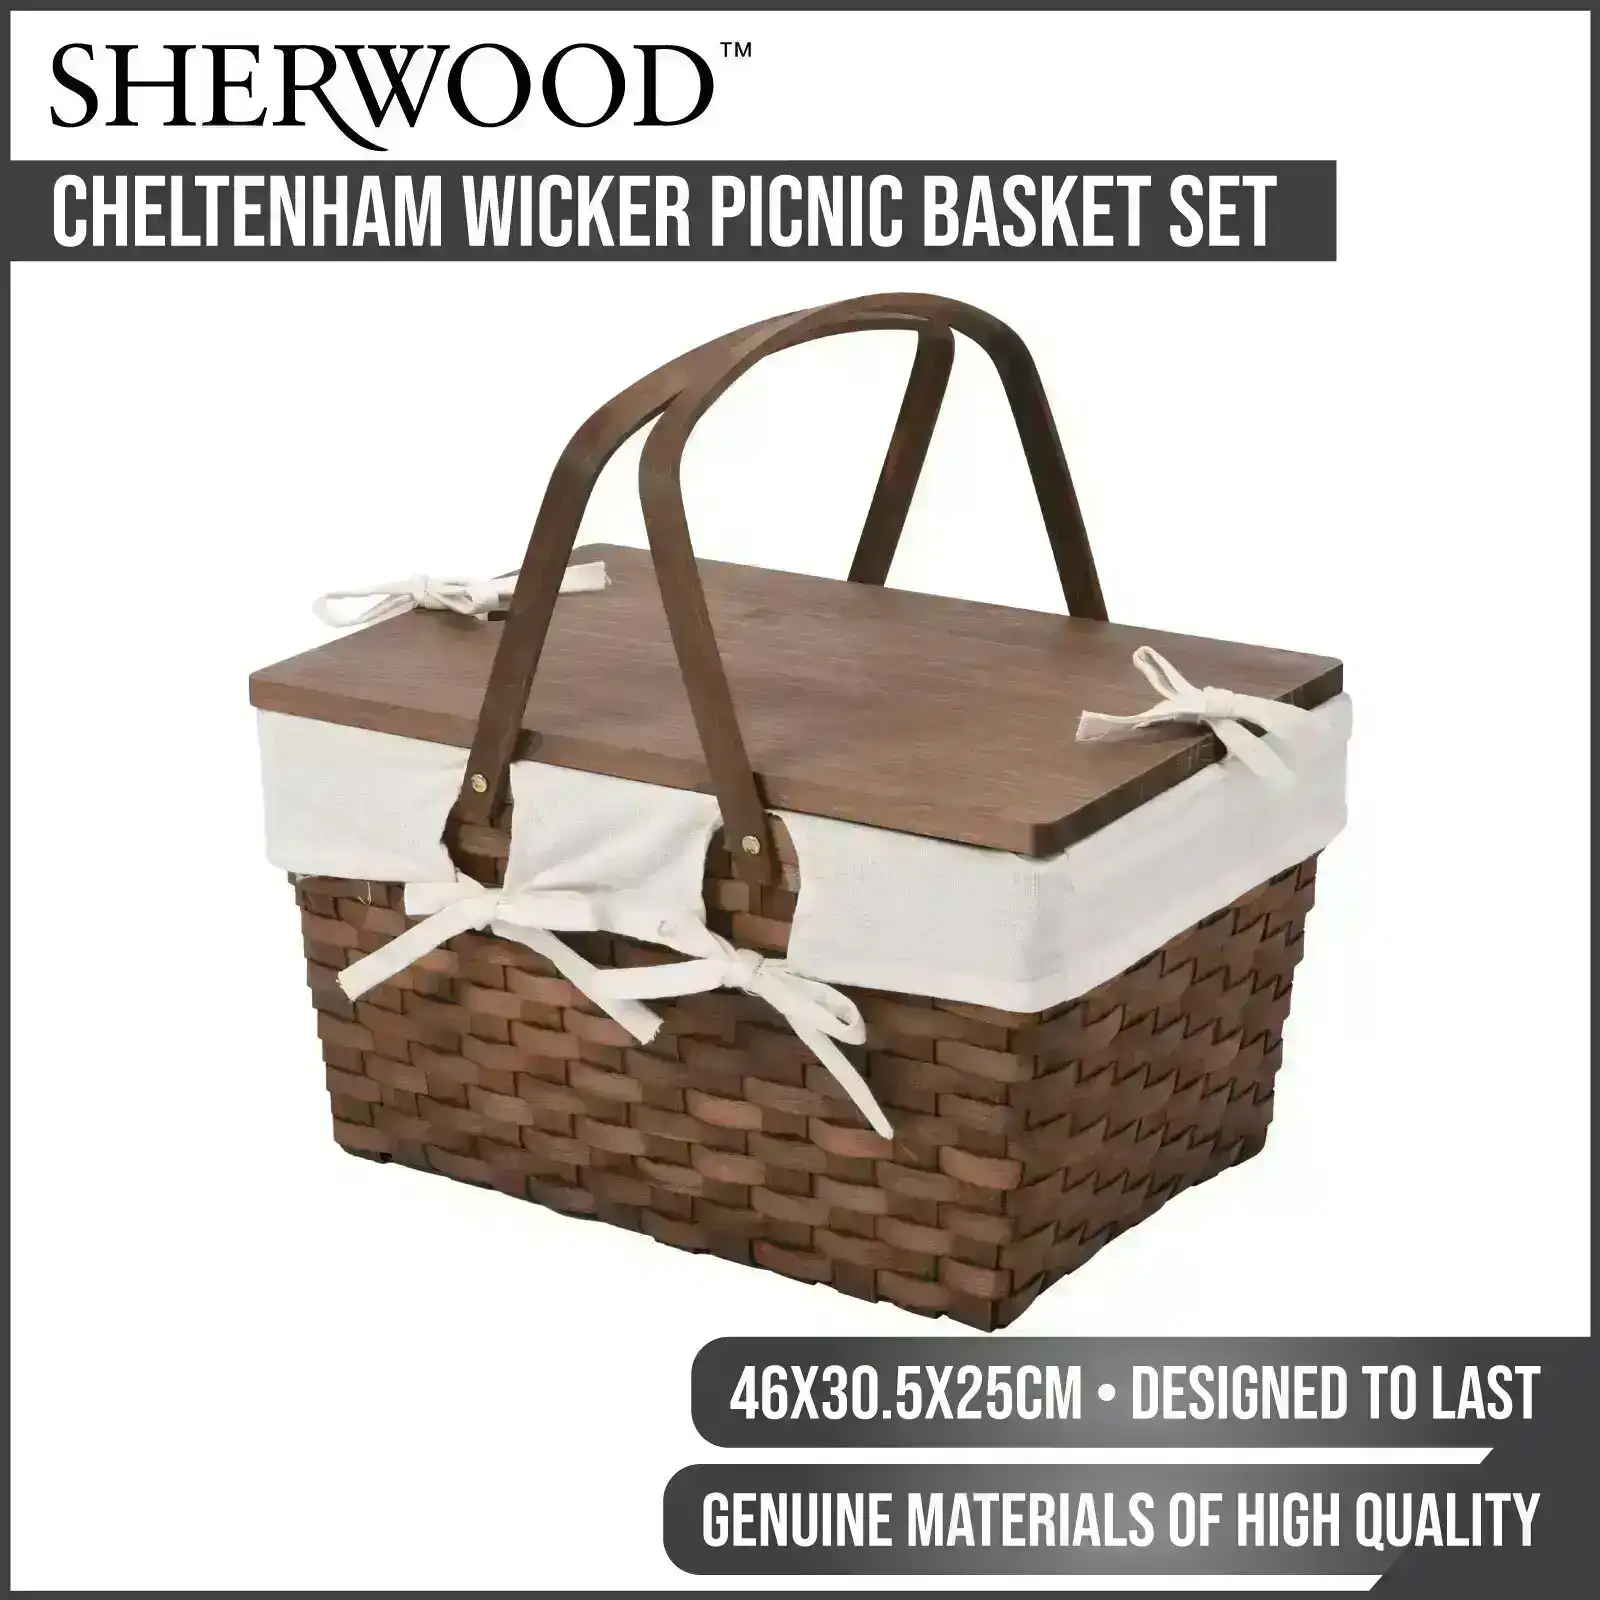 Sherwood Cheltenham Wicker Picnic Basket Set Brown 46x30.5x25cm